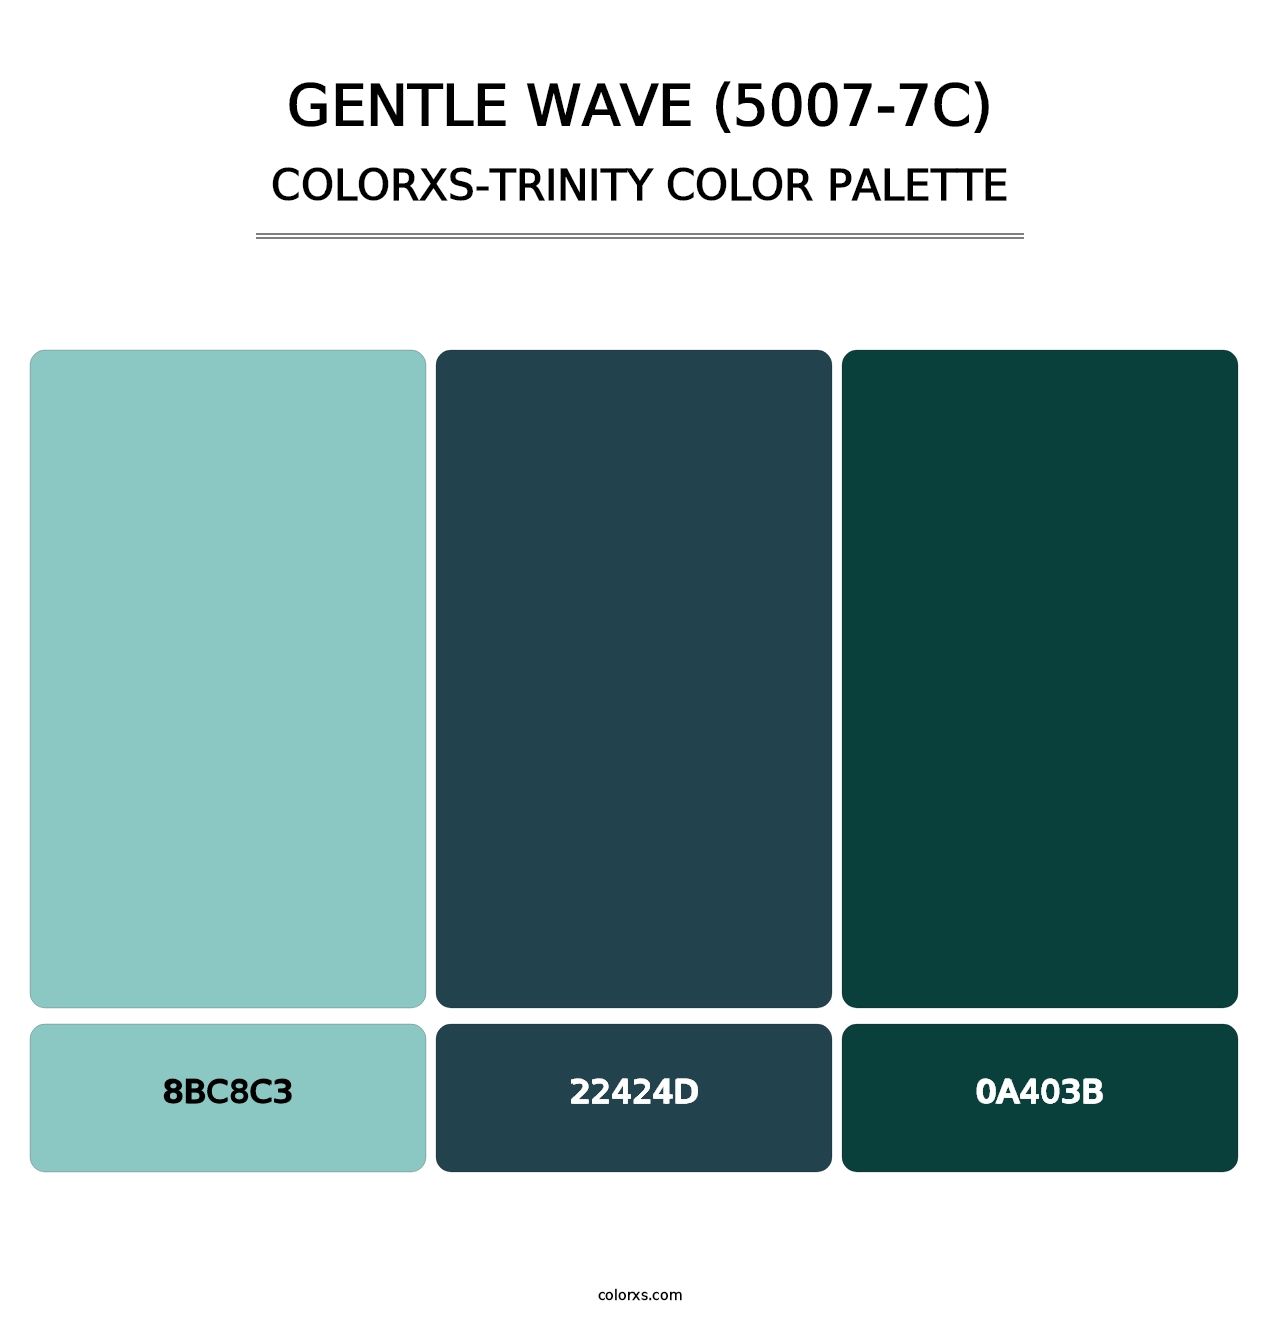 Gentle Wave (5007-7C) - Colorxs Trinity Palette